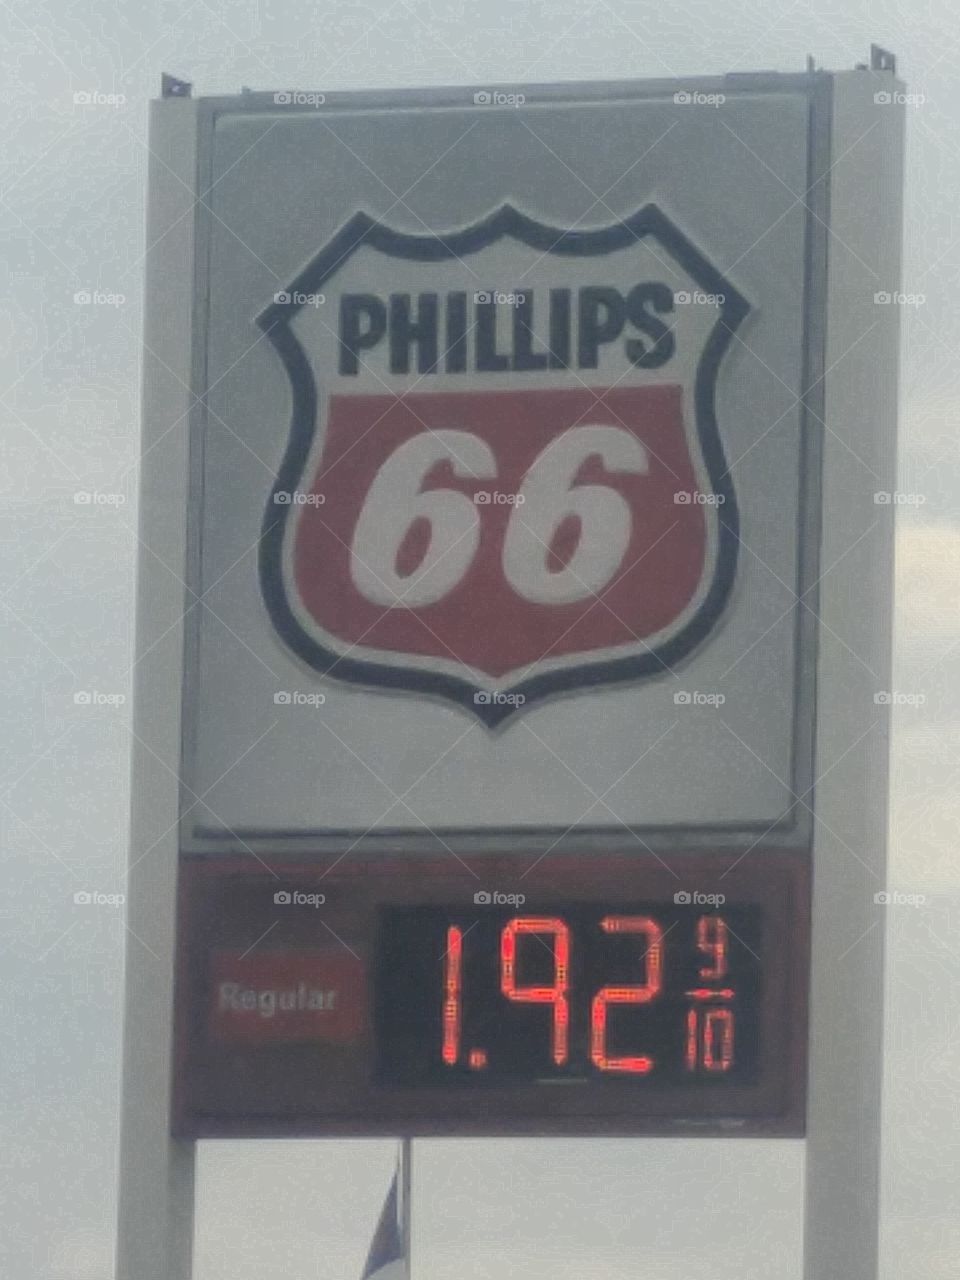 Cheap gas, please come back.